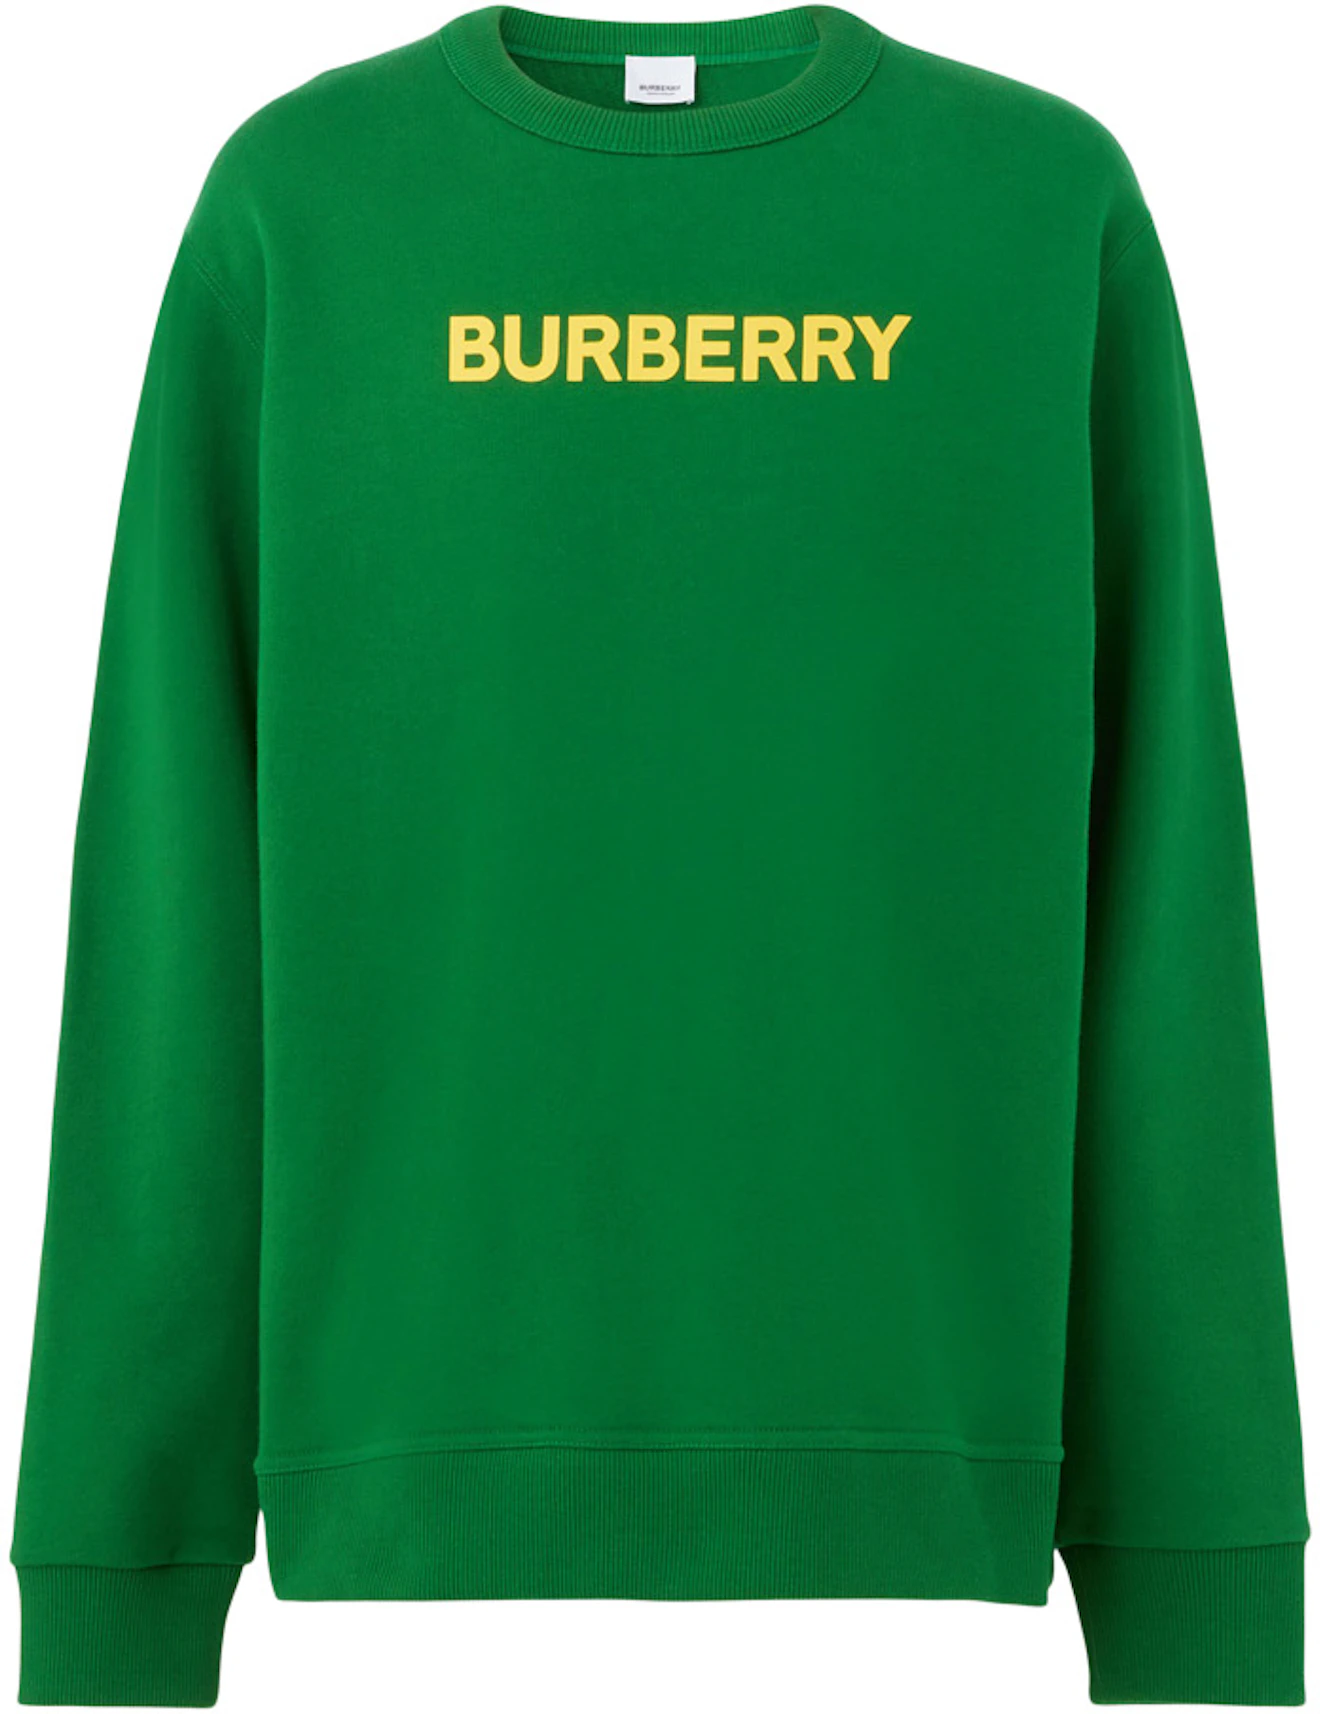 Arriba 88+ imagen green burberry sweater